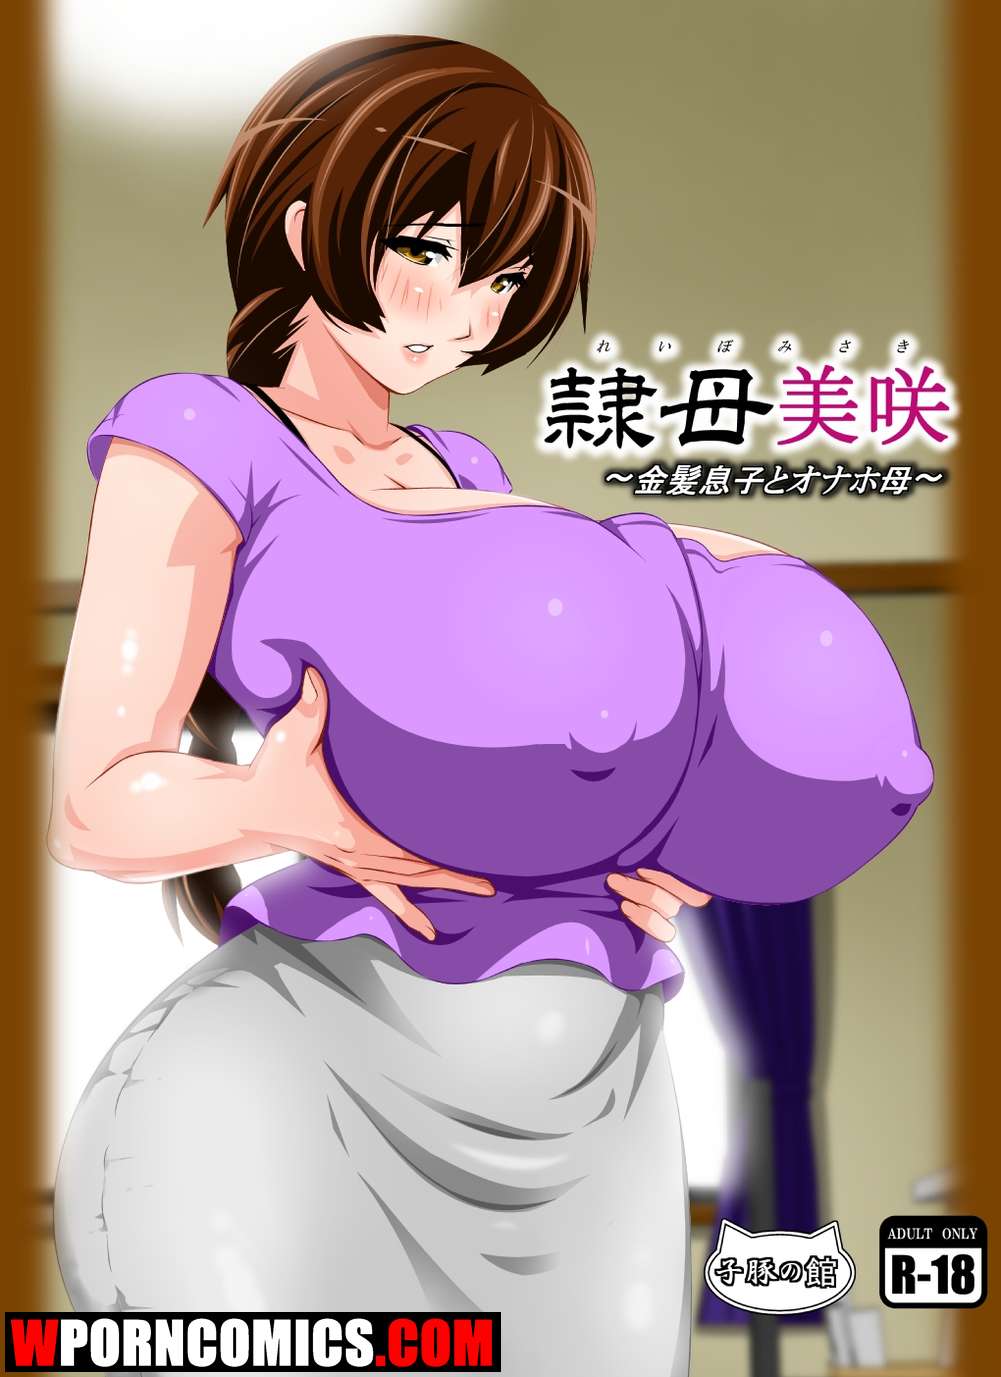 Anime girl with huge boobs porn comic